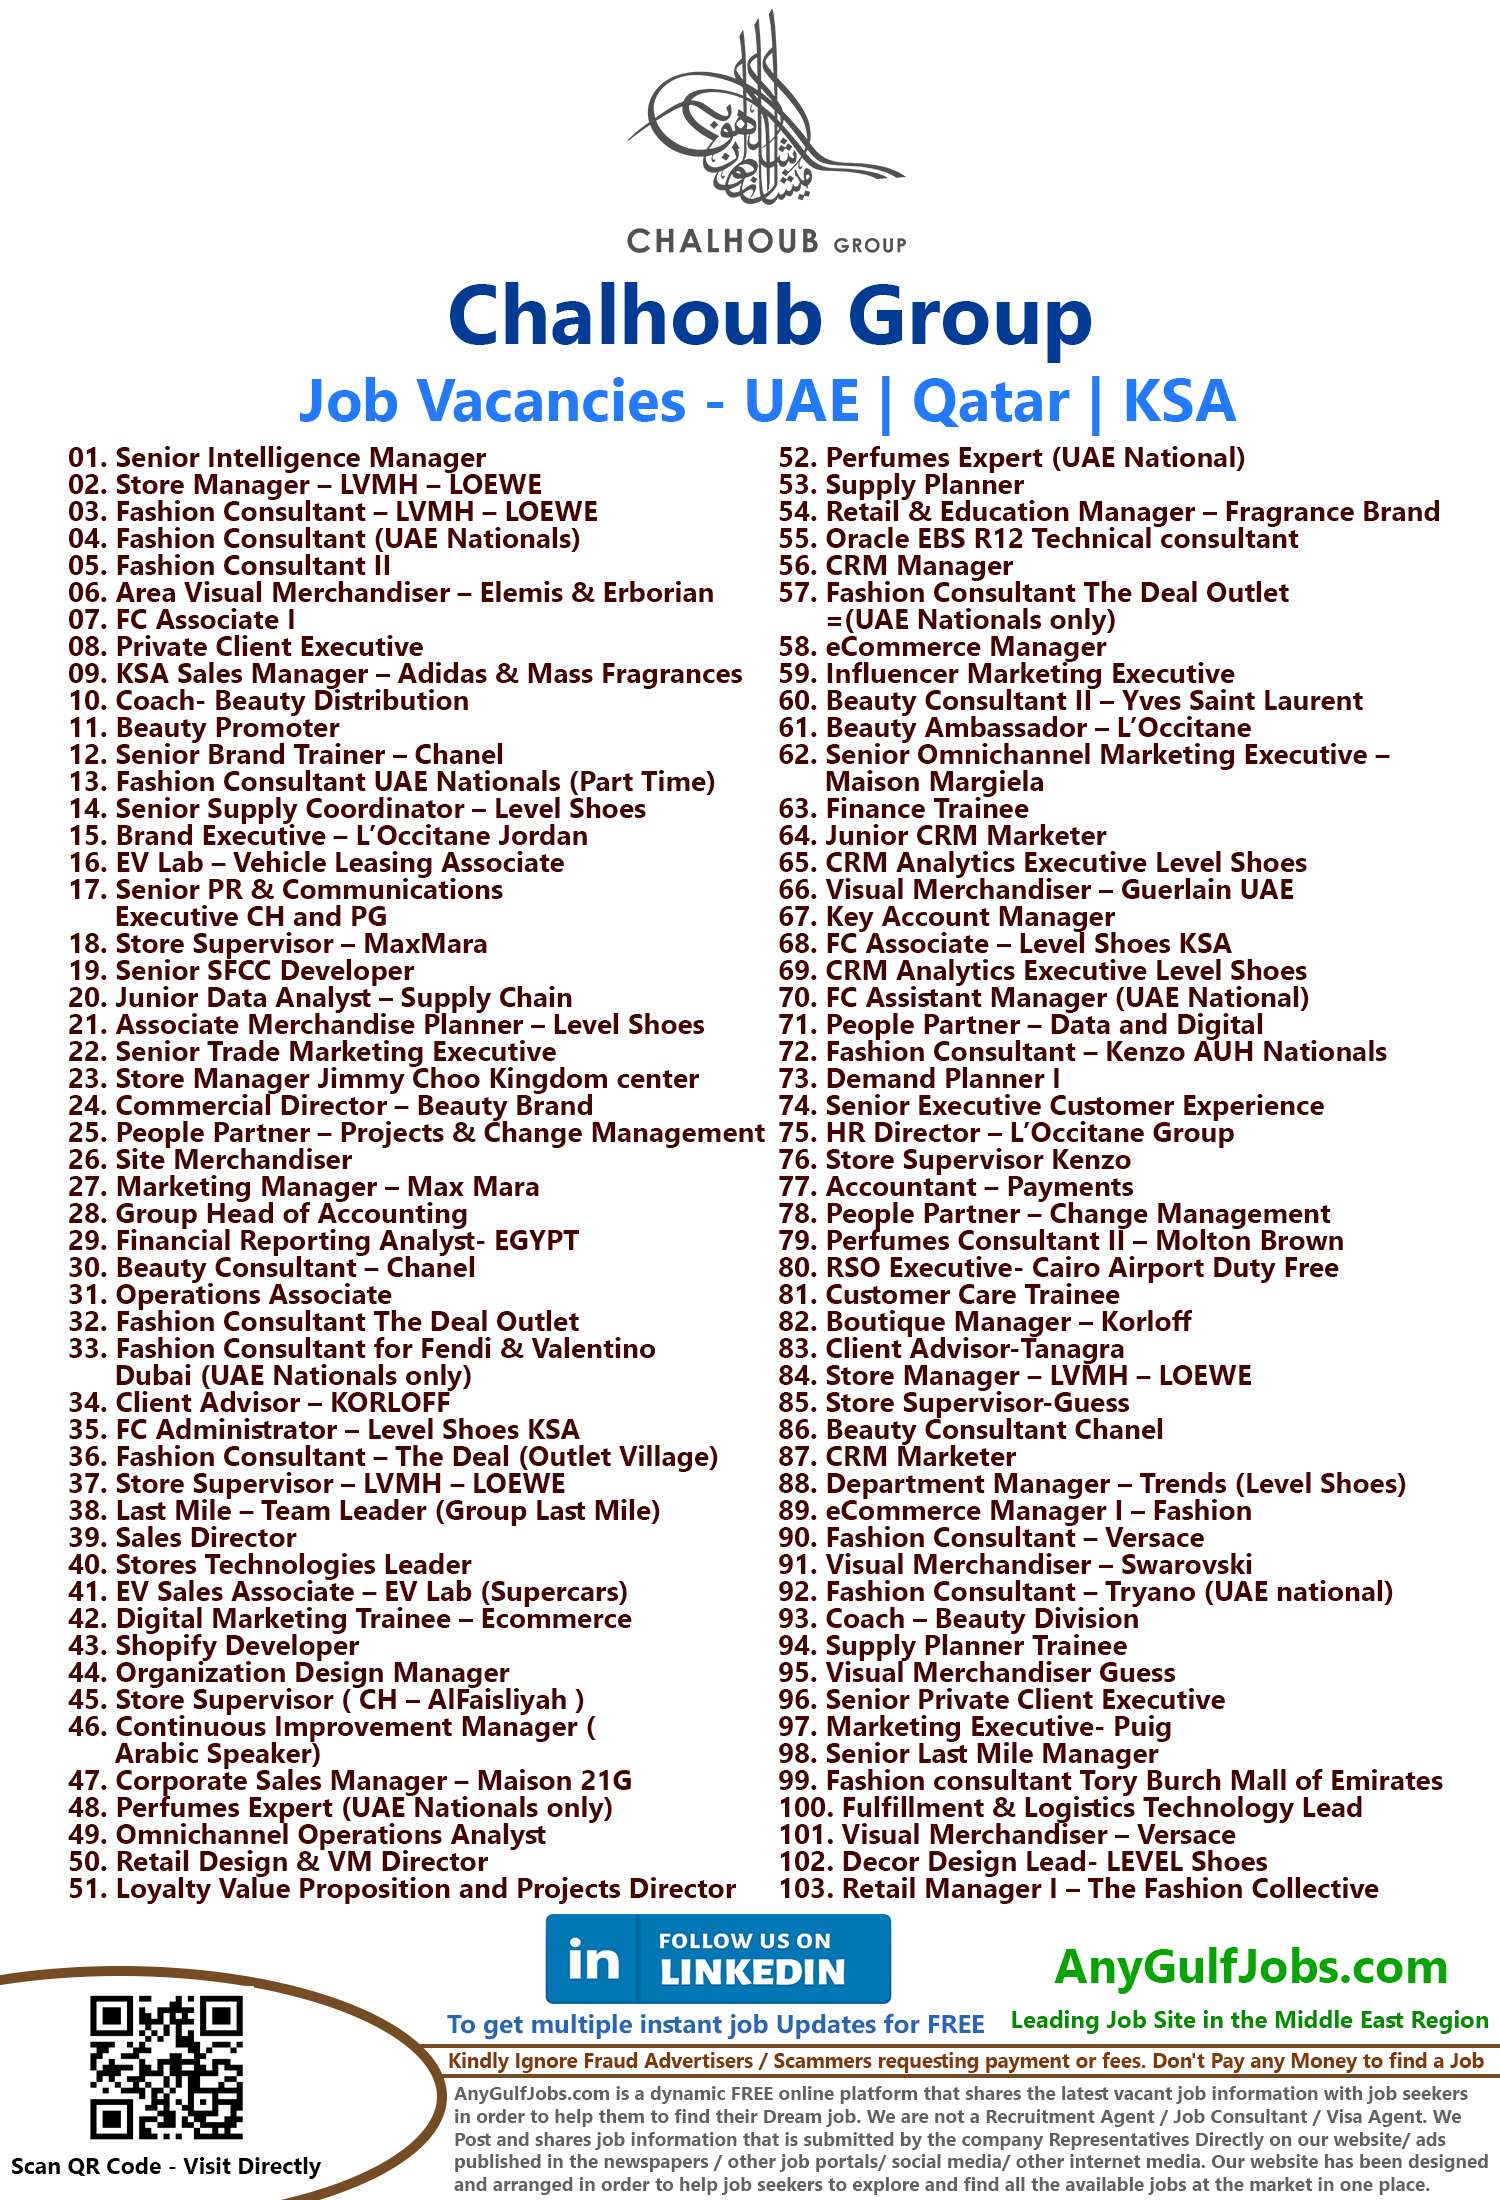 Chalhoub Group Job Vacancies - Dubai, UAE